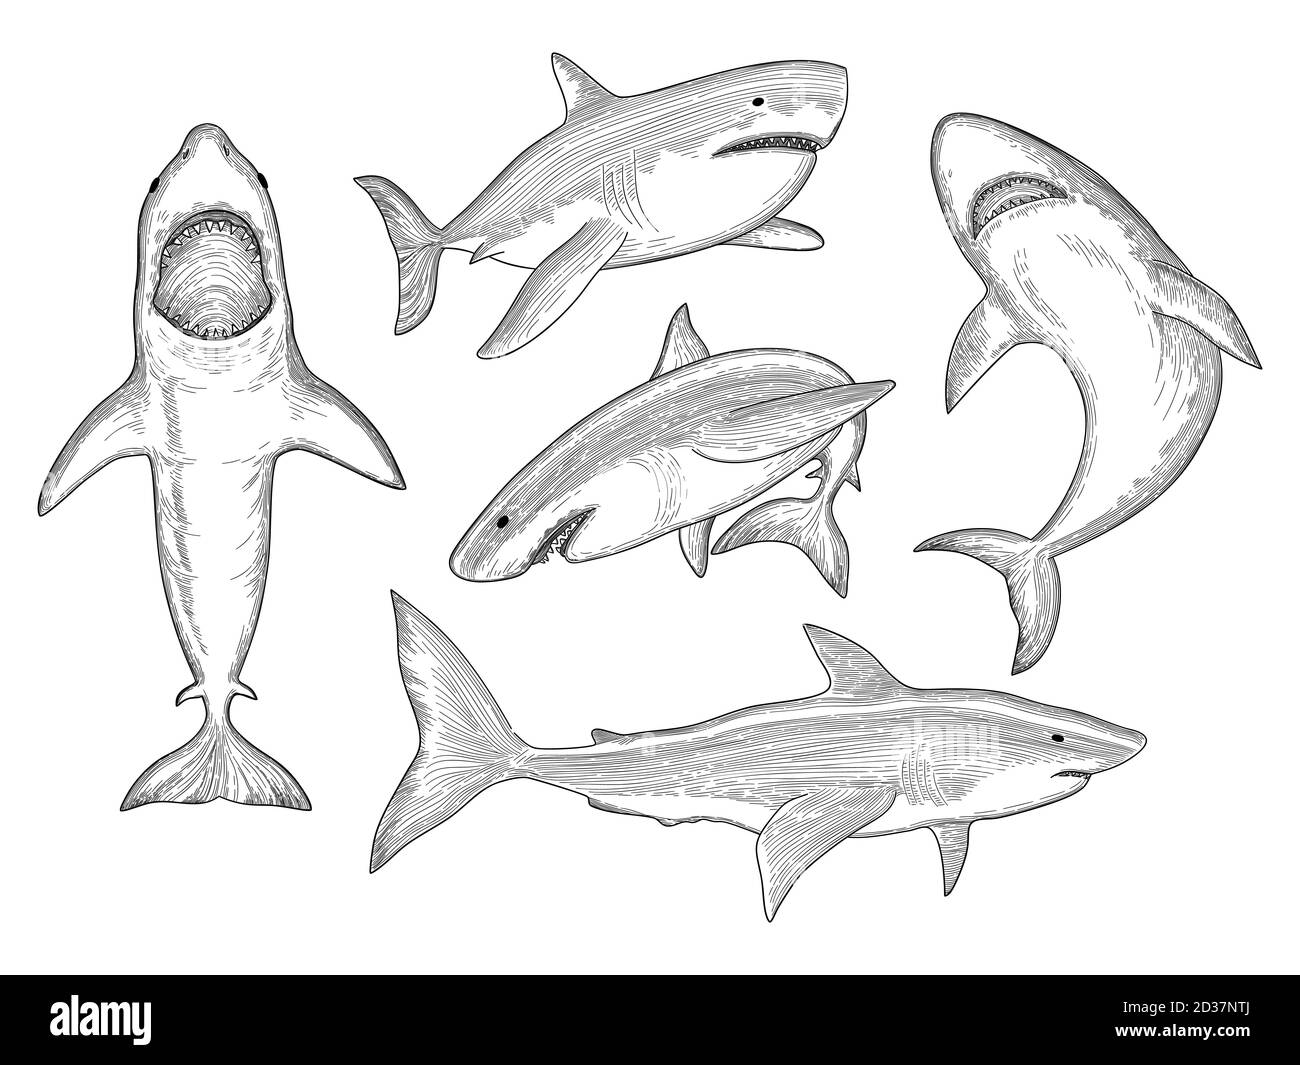 Tiburãn dibujado a mano agua criatura que fluye pec monstruo grande con la boca vector colecciãn de bocetos imagen vector de stock